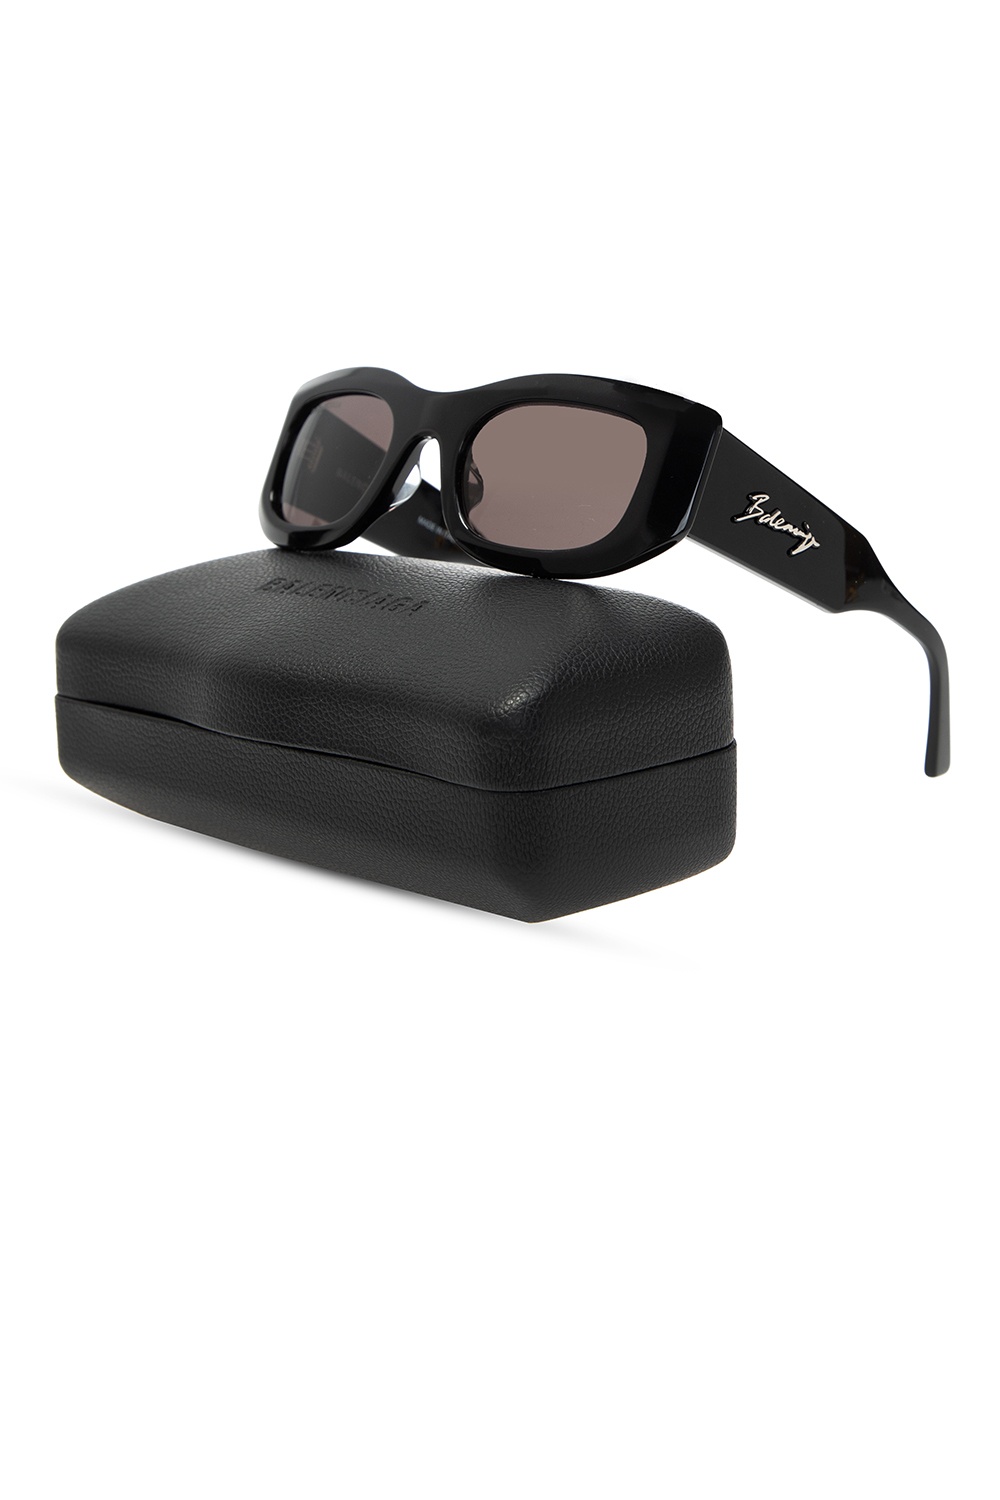 Balenciaga marled frames sunglasses